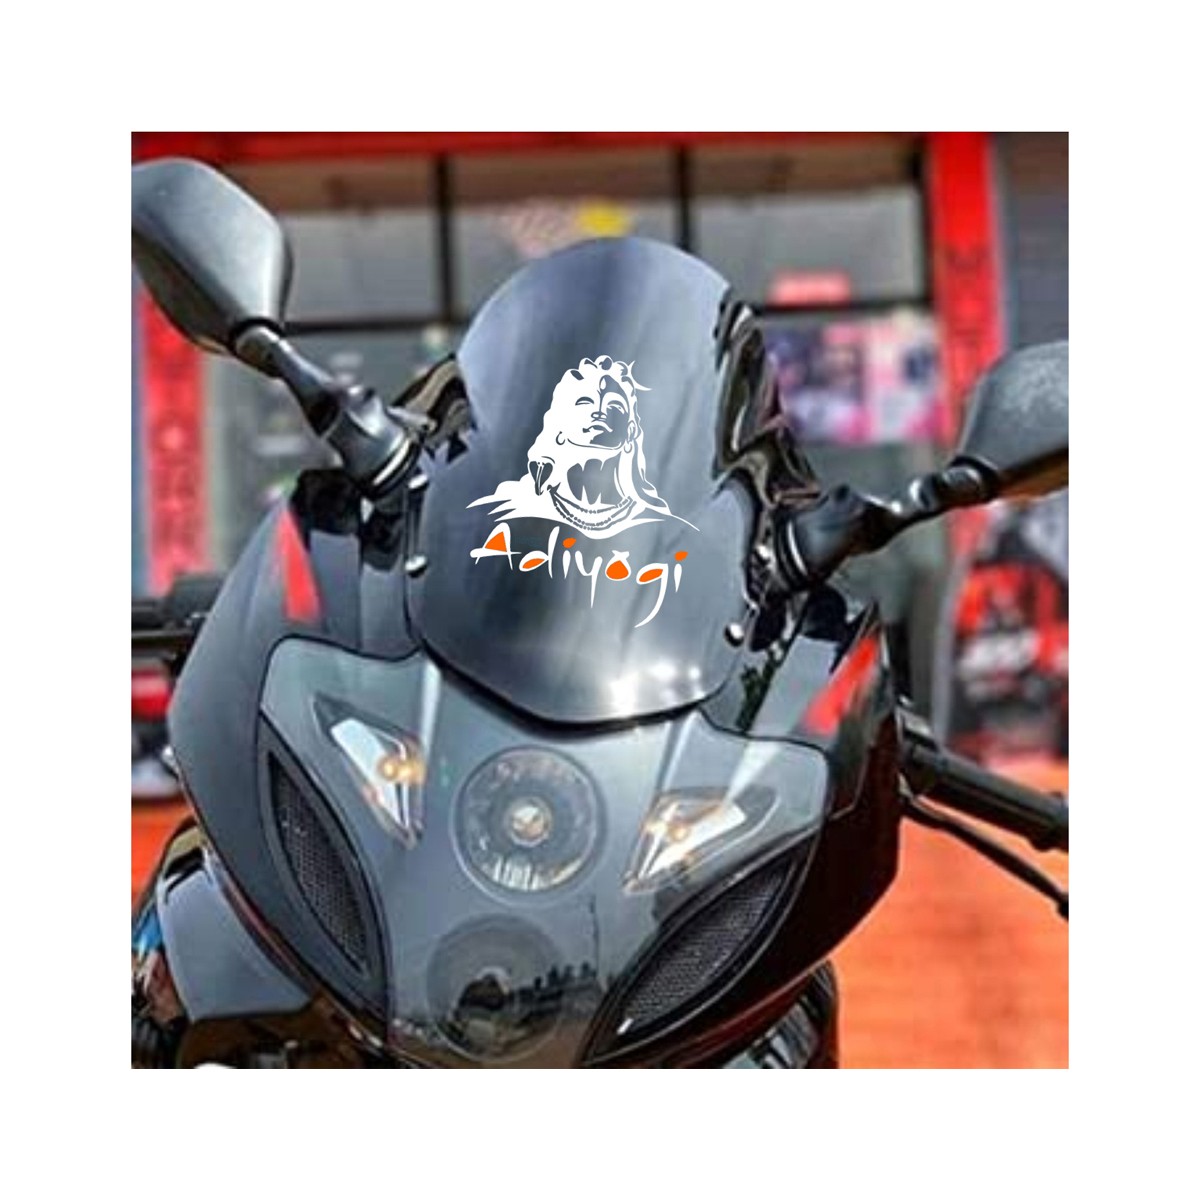 indnone® Lord Shiva Sticker for Bike Waterproof PVC Vinyl Decal Sticker | White & Orange Color Standard Size